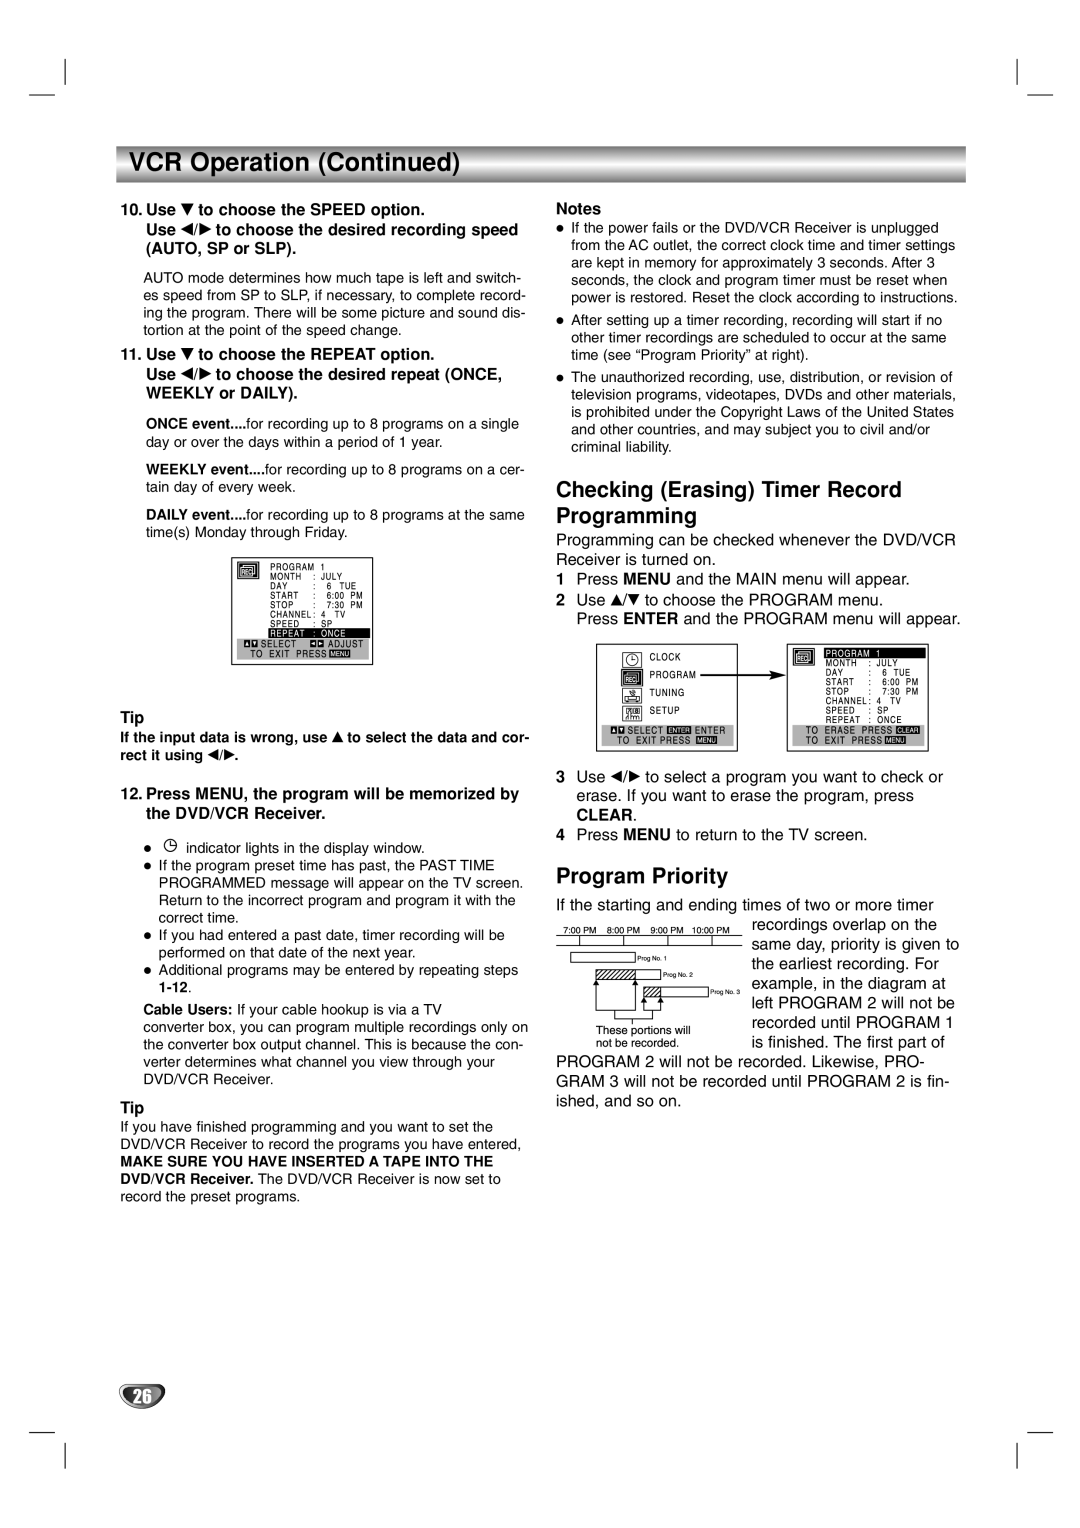 Toshiba SD-V57HTSU owner manual VCR Operation Continued, Checking Erasing Timer Record Programming, Program Priority 